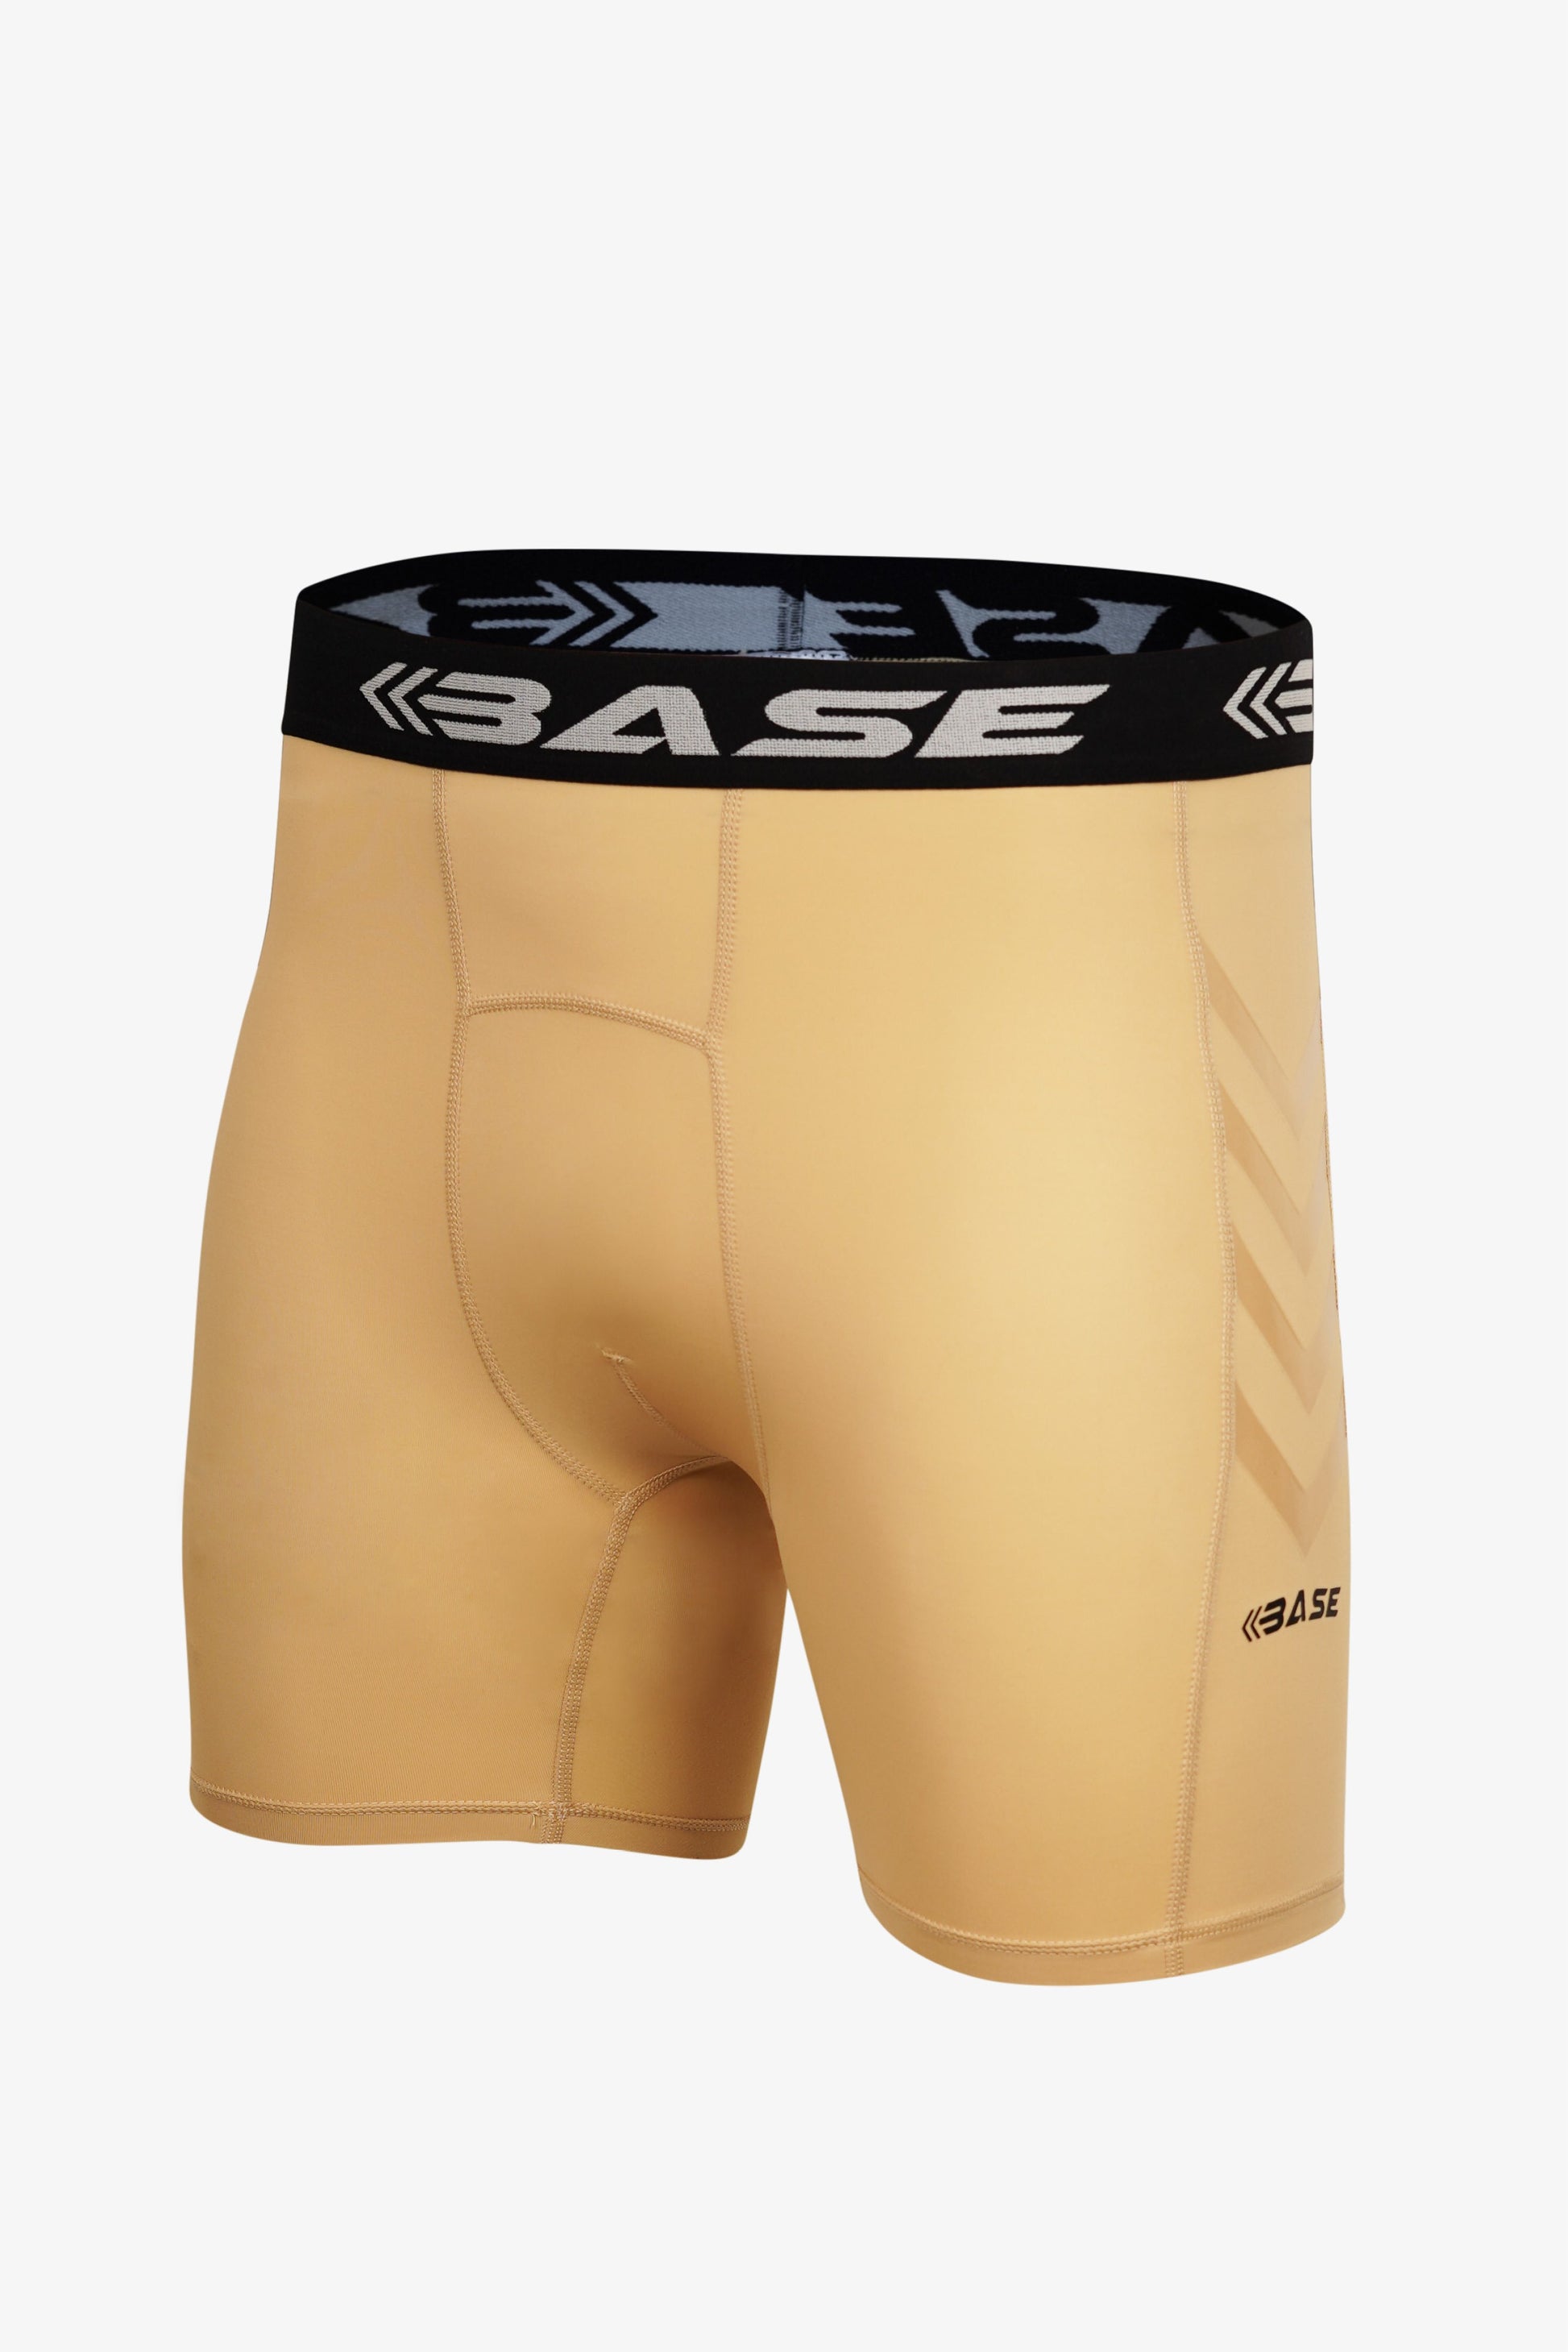 BASE Men's Compression Shorts - Nude – Adelaide 36ers